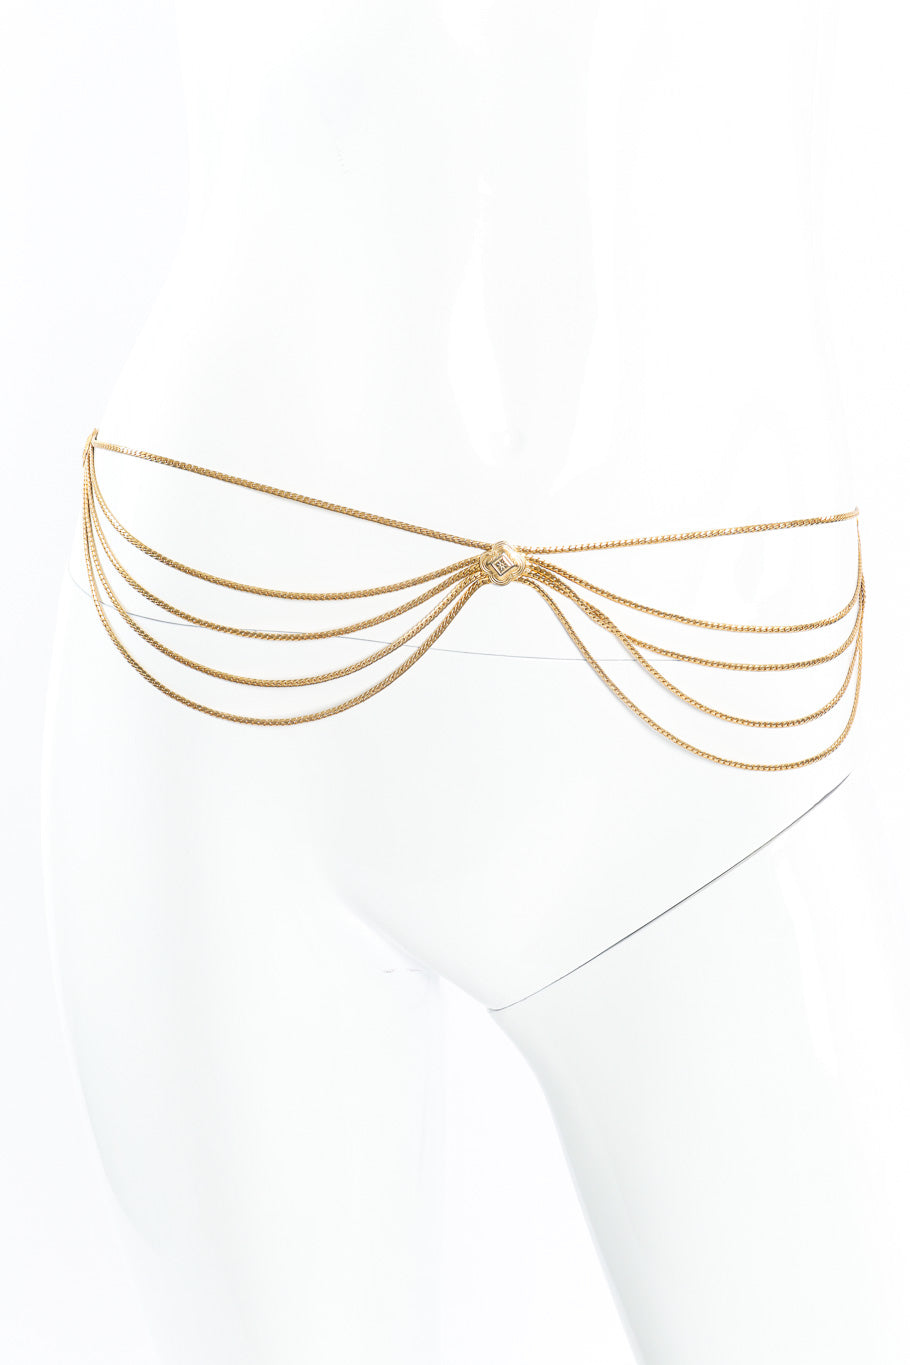 Christian Dior draped waist chain on mannequin @recessla